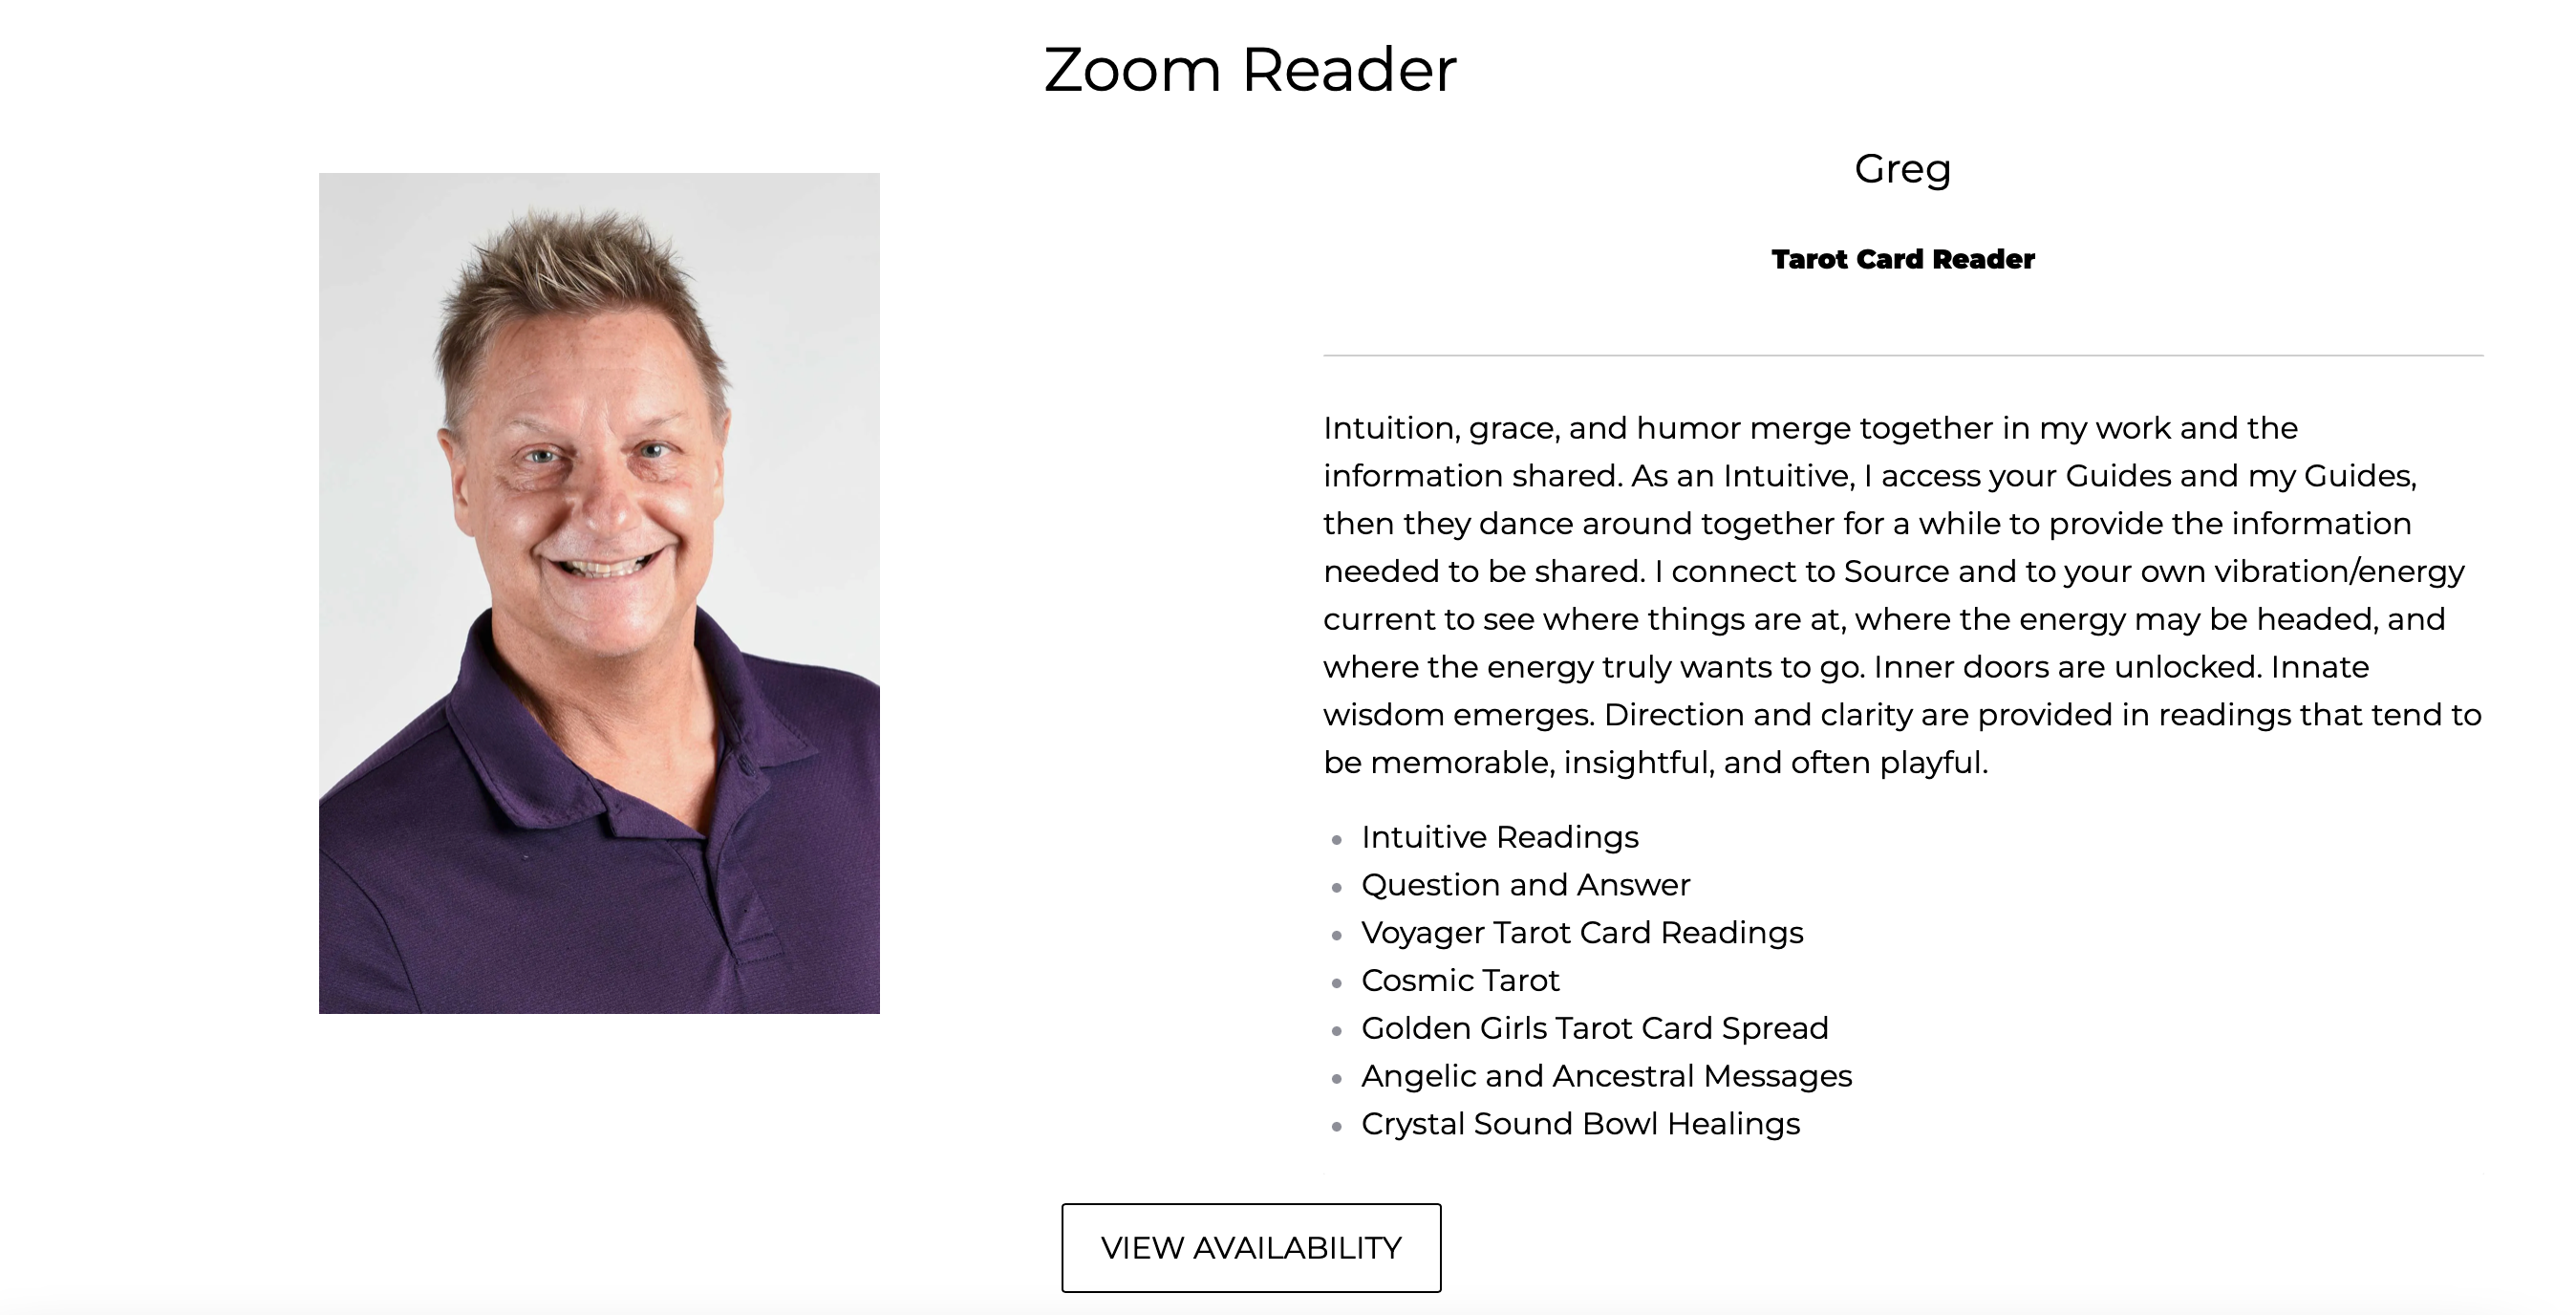 Greg Zoom Readings